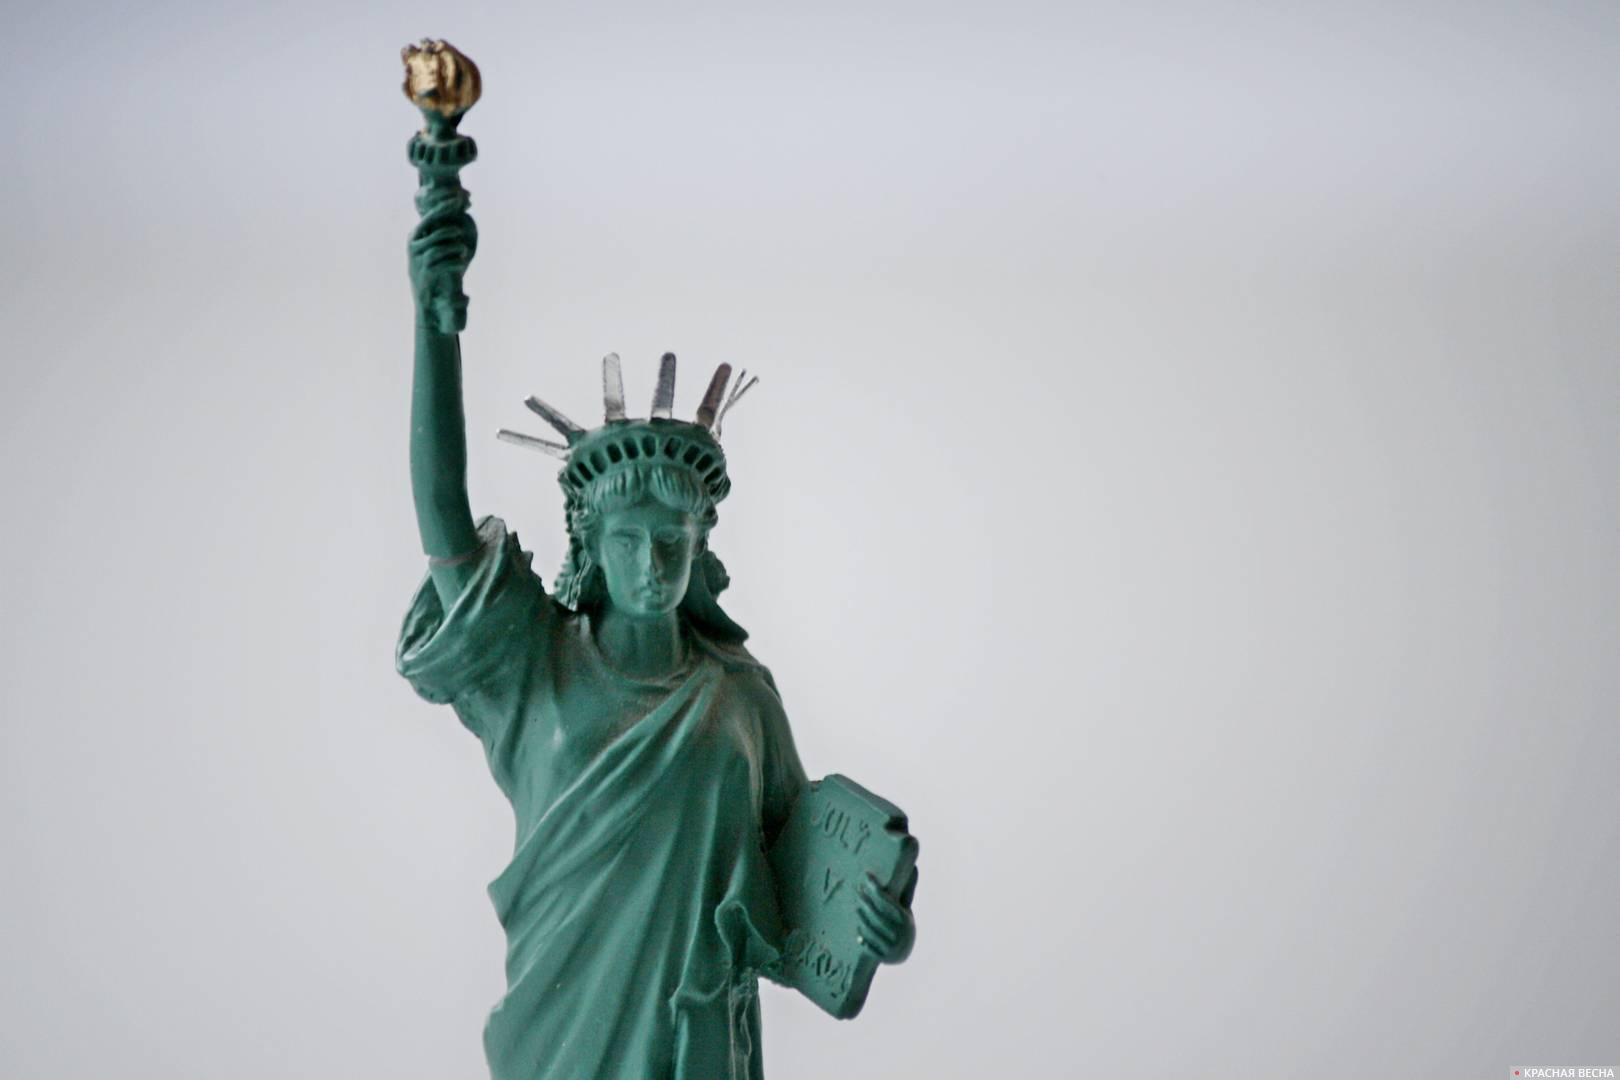 Фигурка статуи Свободы